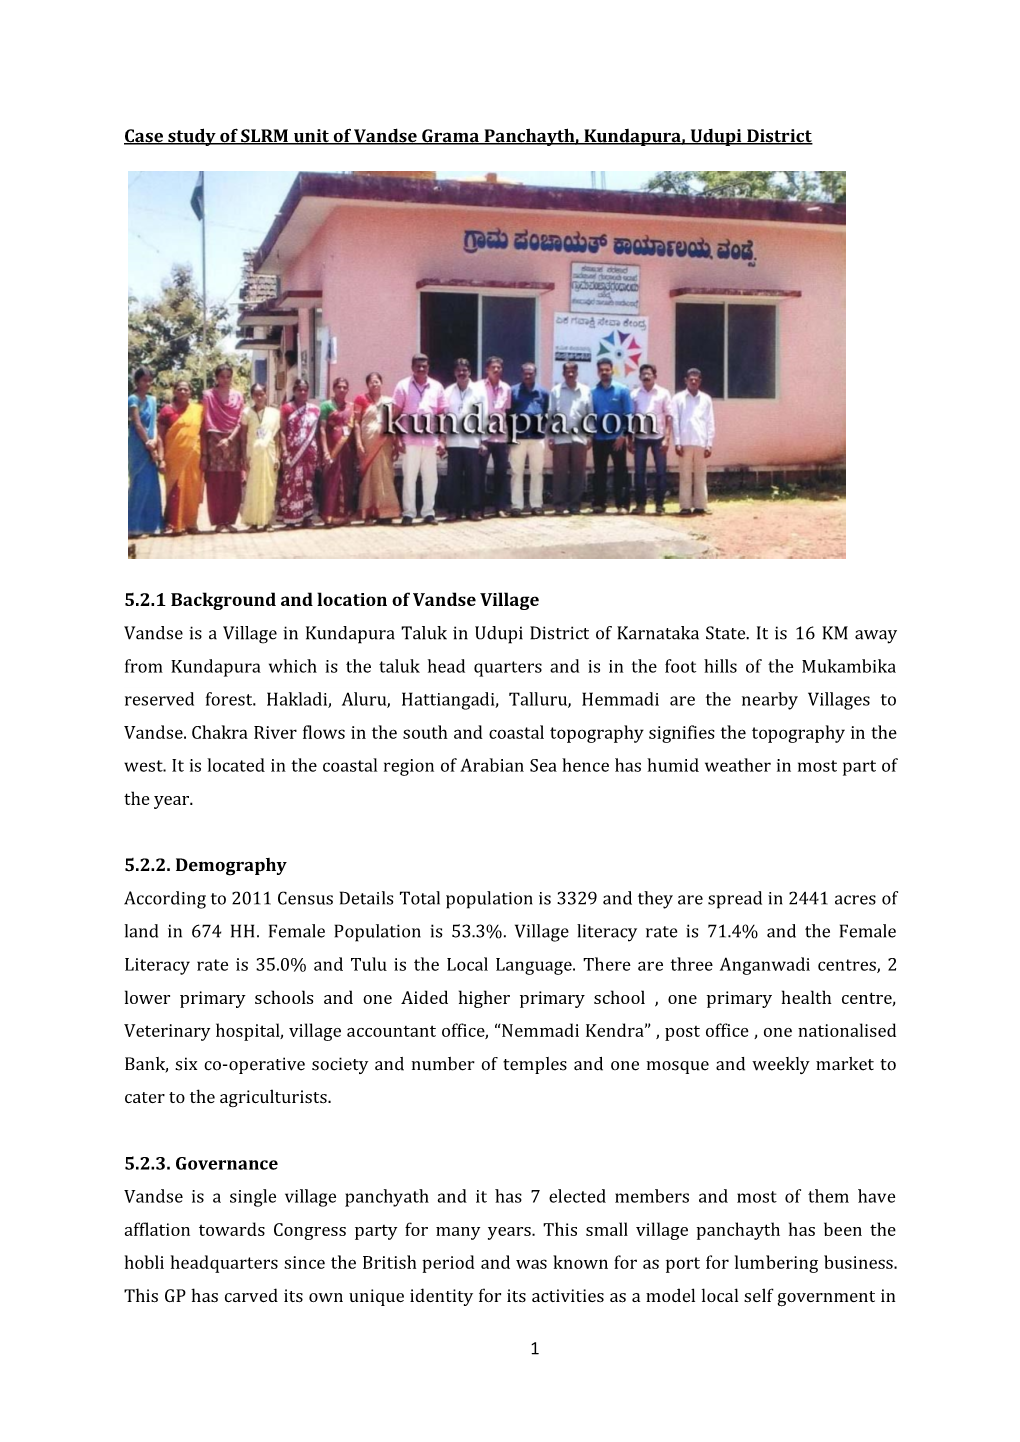 1 Case Study of SLRM Unit of Vandse Grama Panchayth, Kundapura